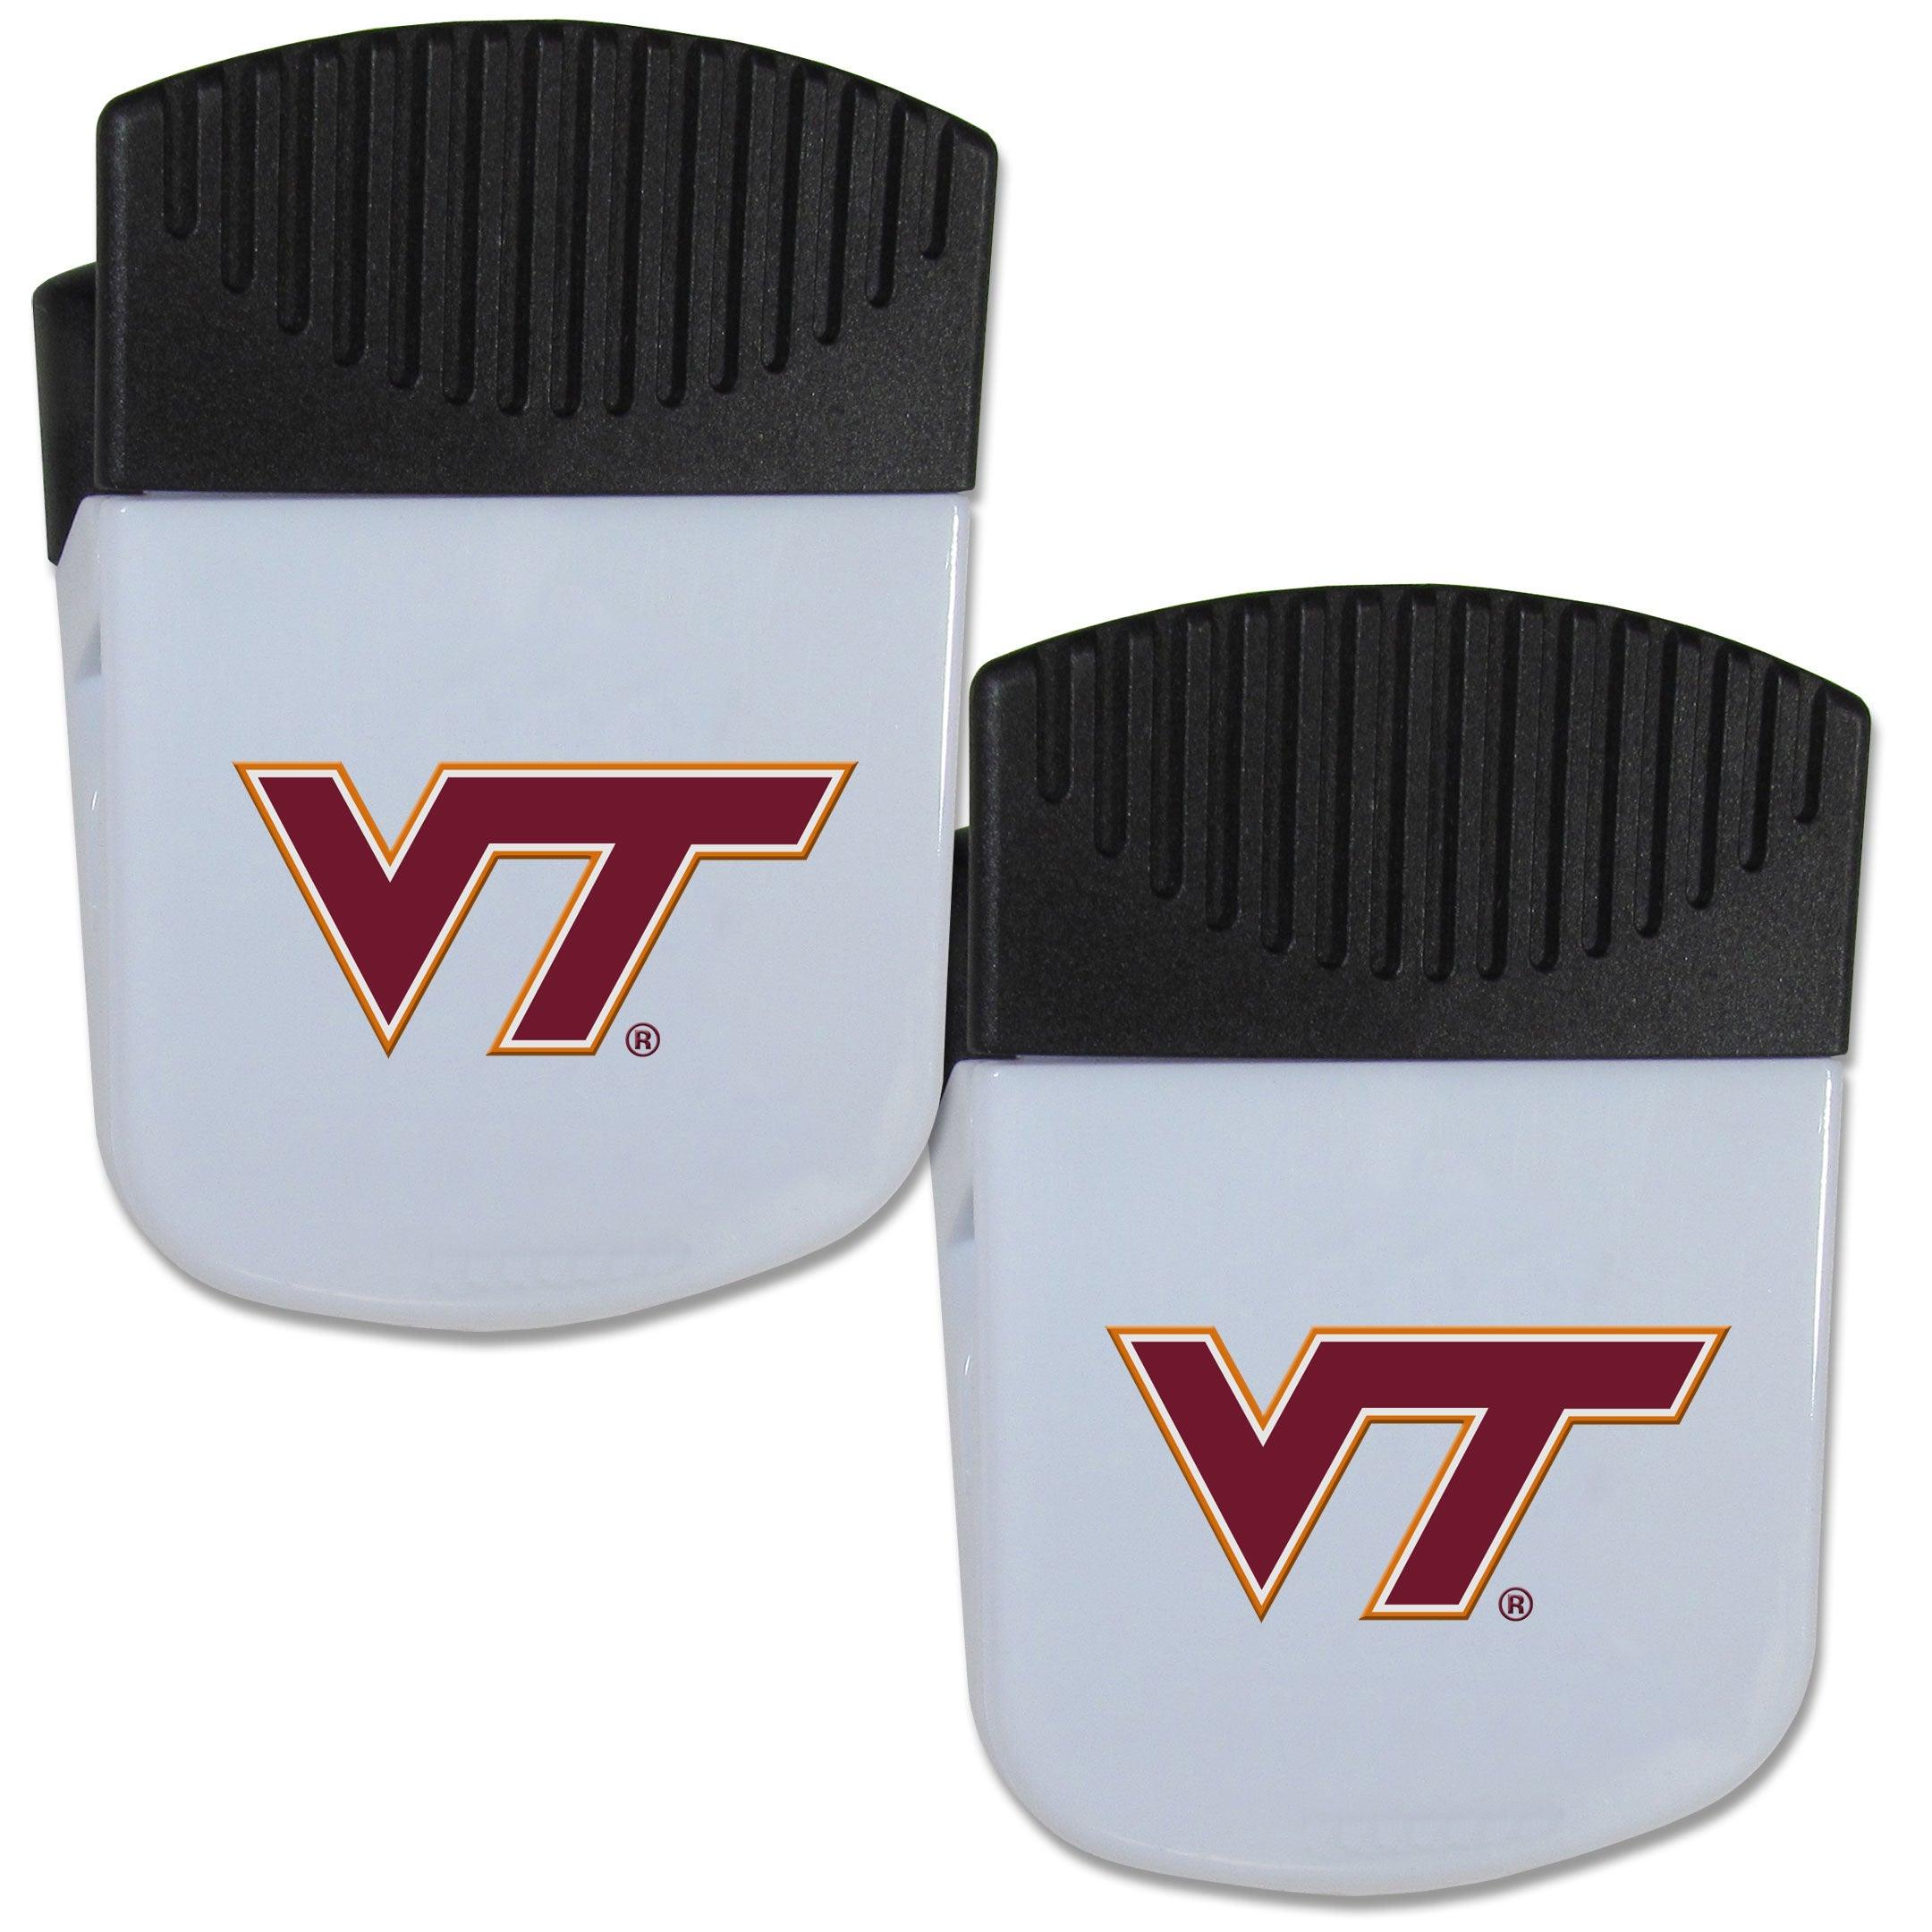 Virginia Tech Hokies Chip Clip Magnet with Bottle Opener, 2 pack - Flyclothing LLC